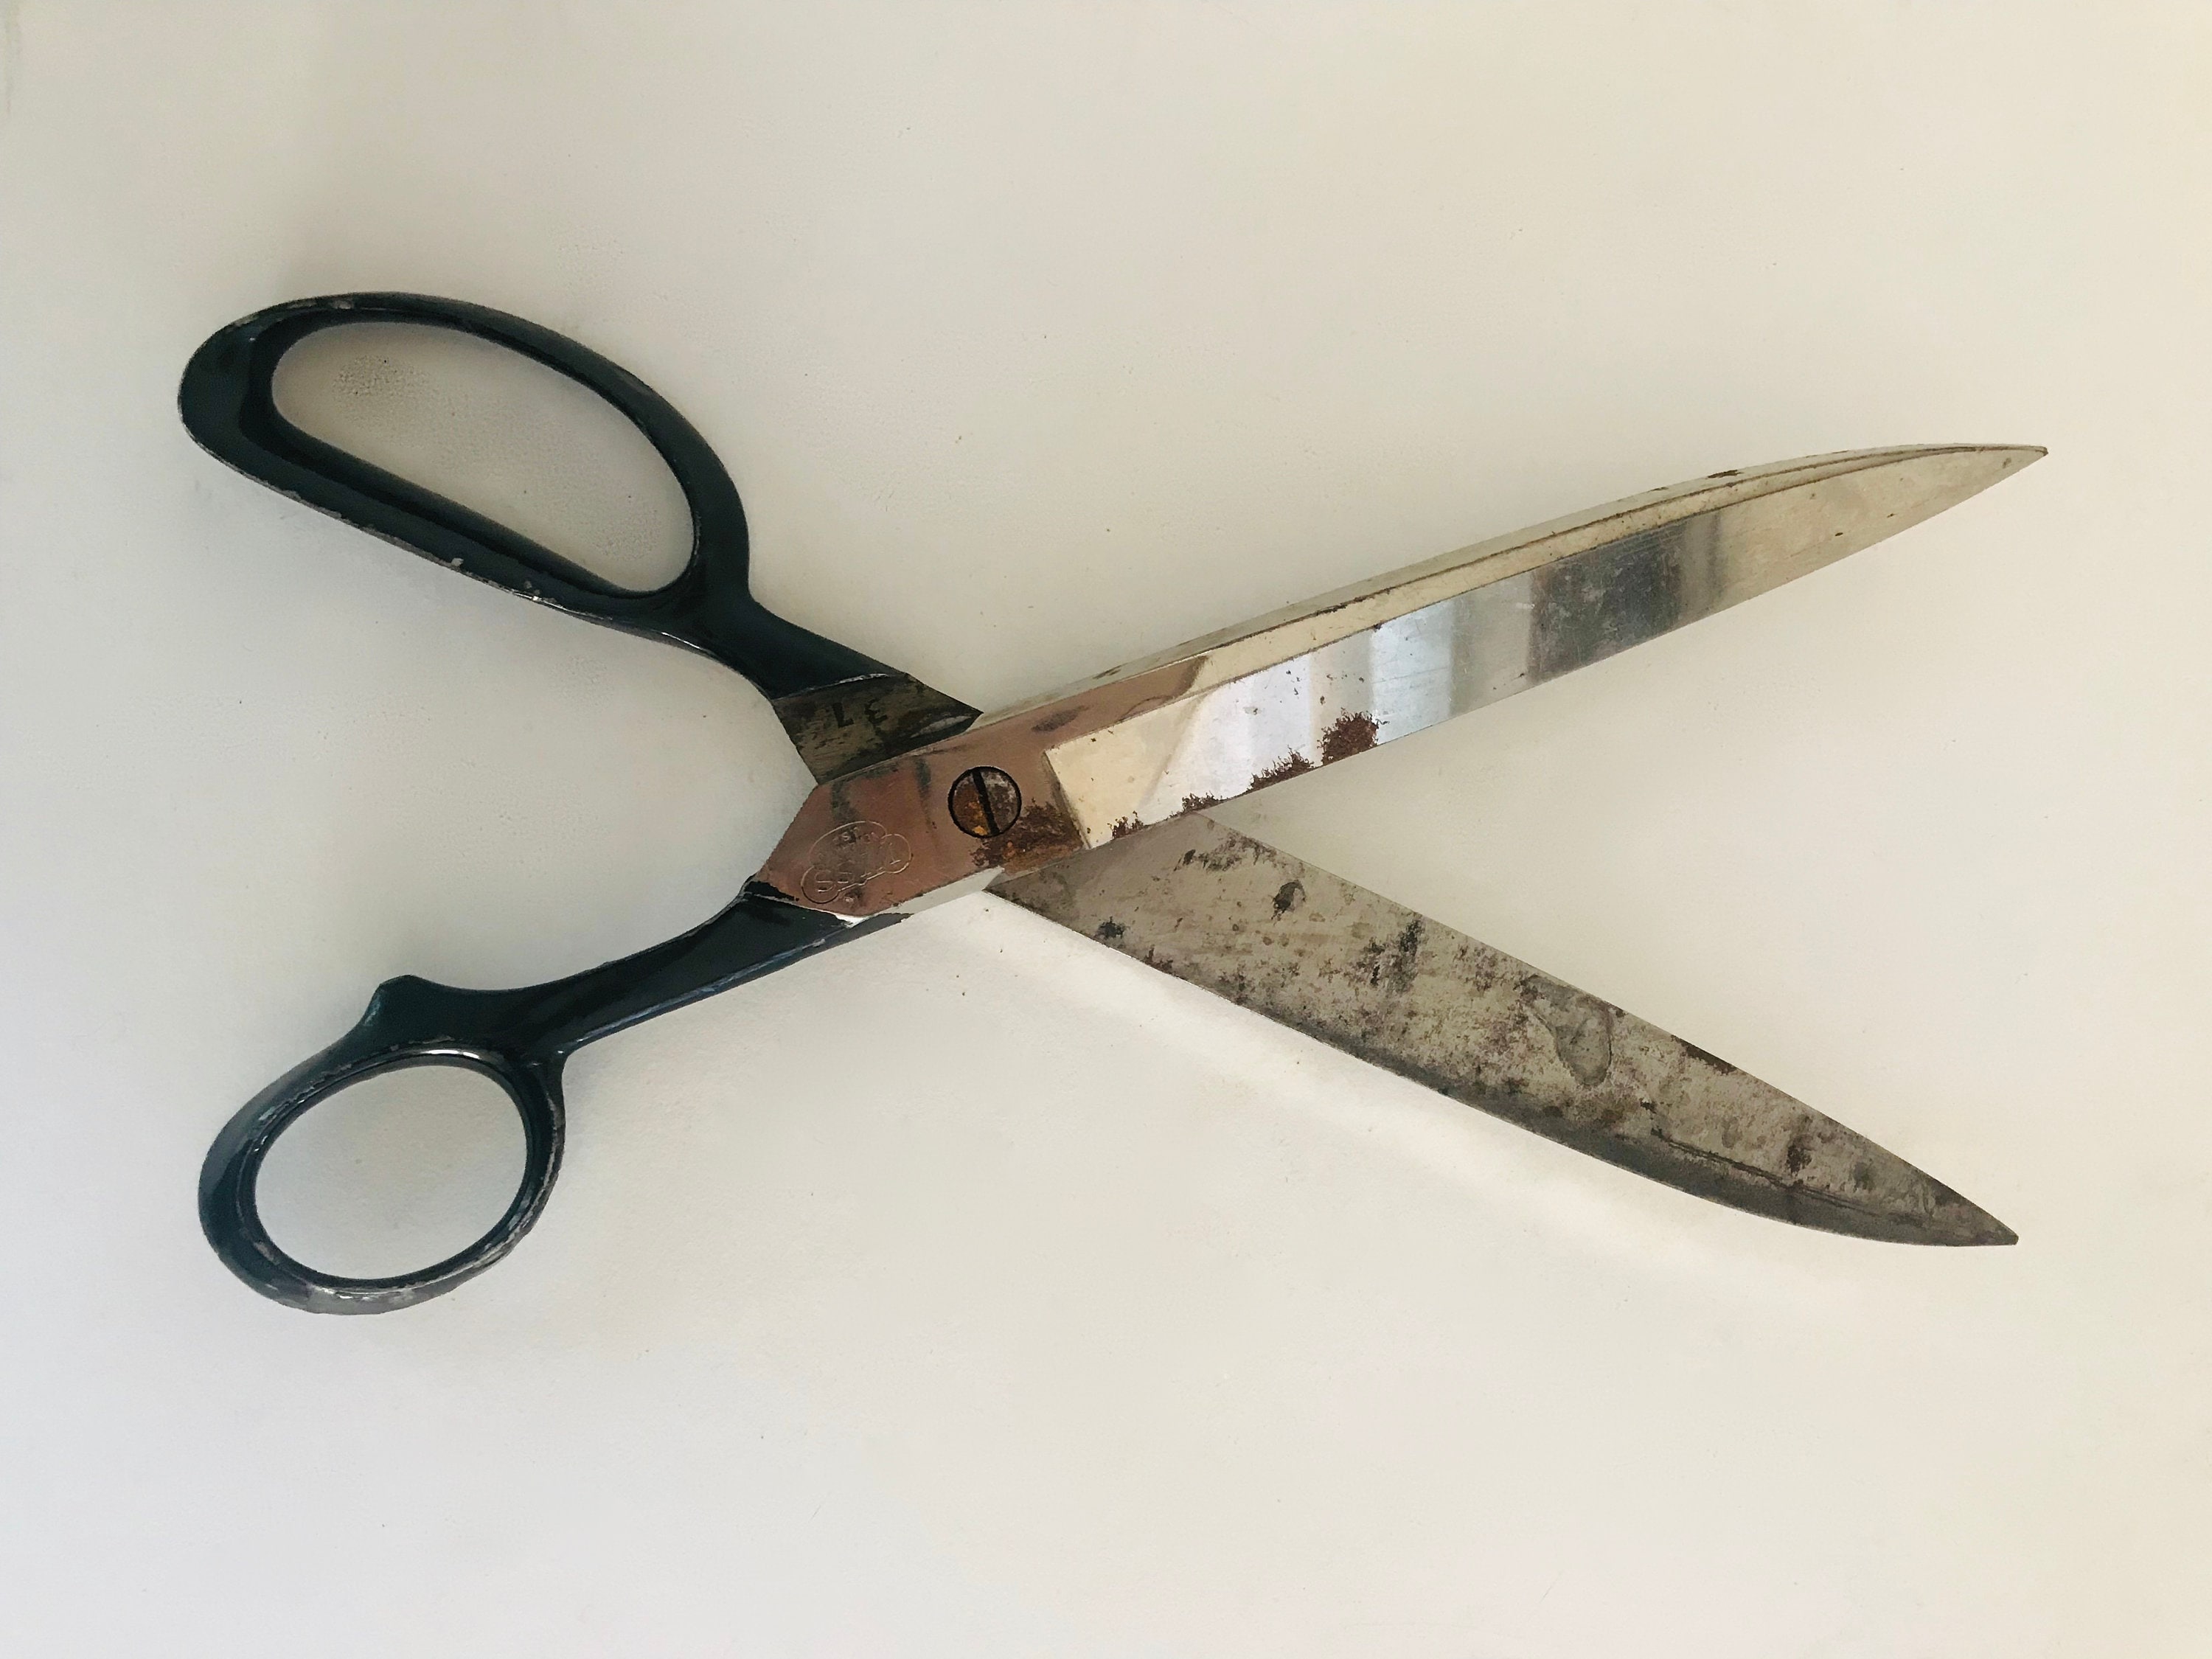 Giant Scissors Prop Cuts Through Clutter – Fixtures Close Up